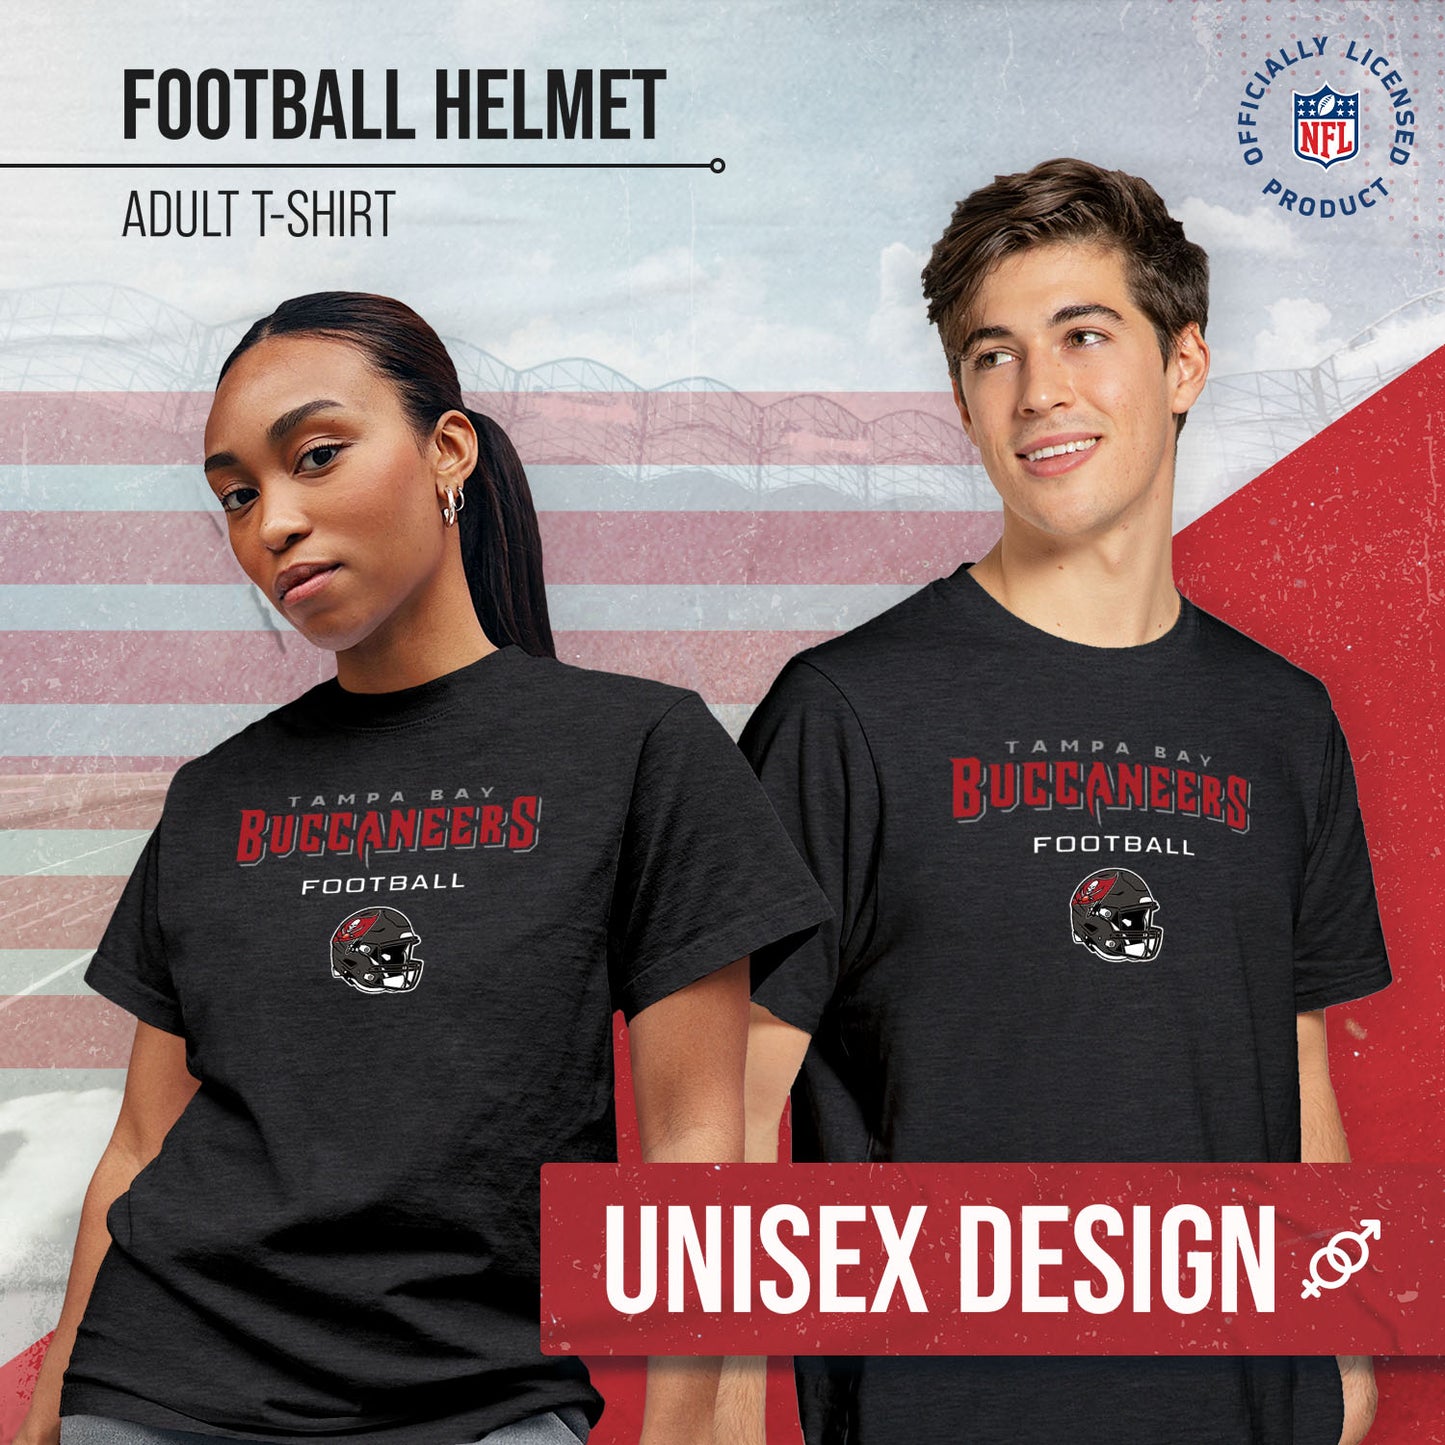 Tampa Bay Buccaneers NFL Adult Football Helmet Tagless T-Shirt - Charcoal